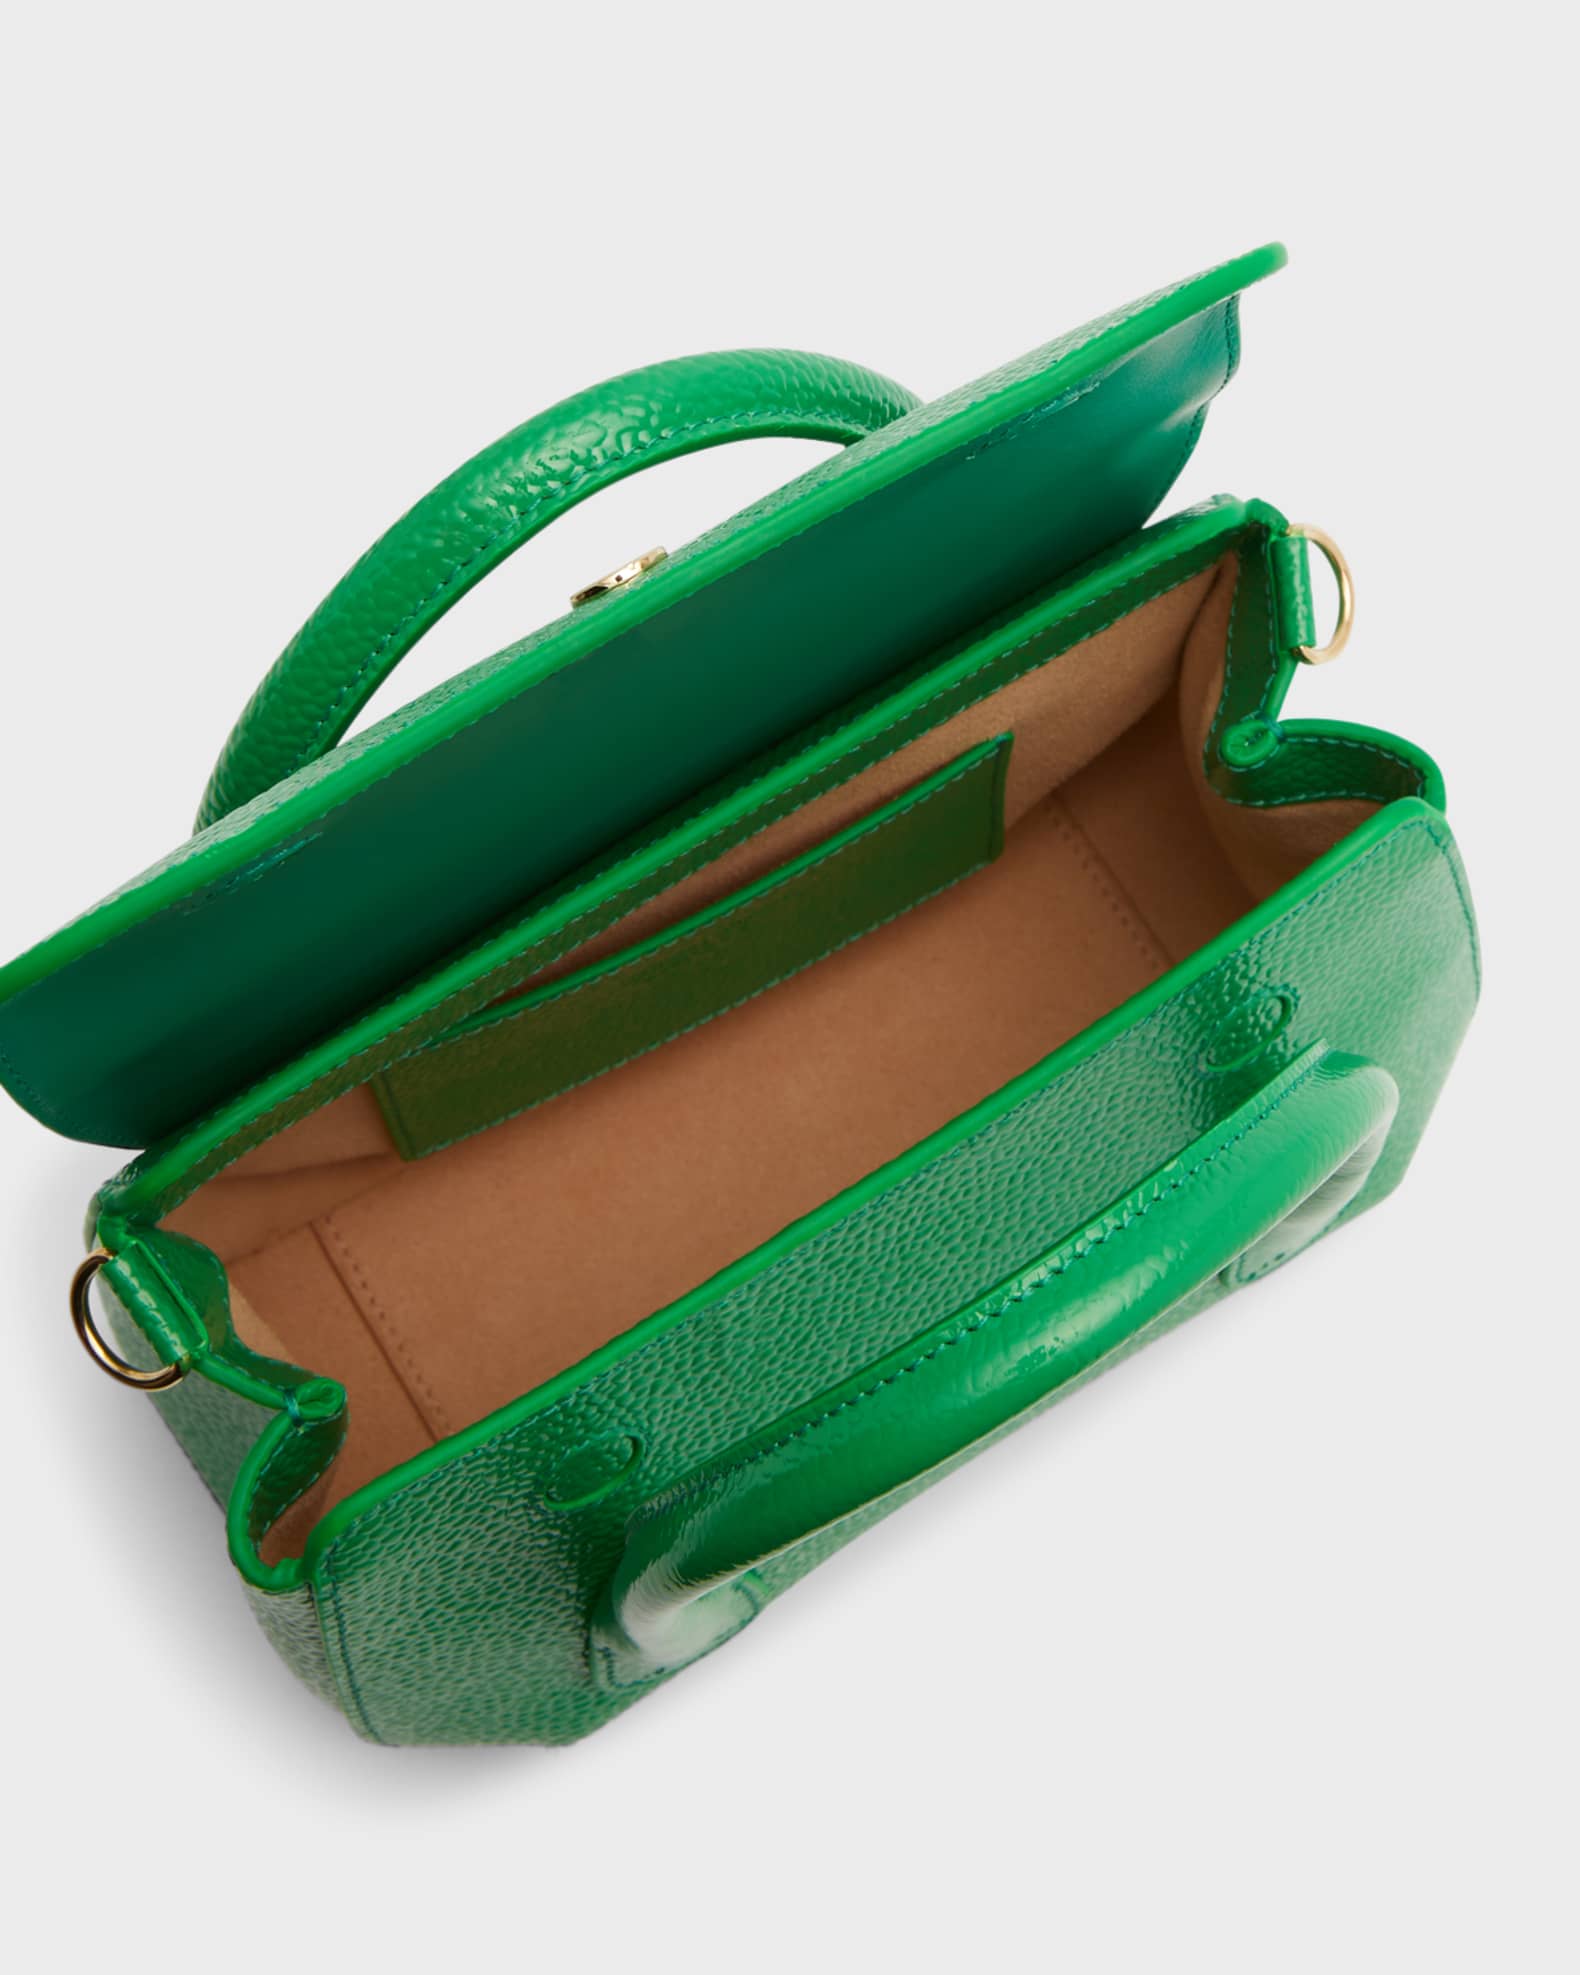 Giorgio Armani Mini Textured Leather Top-Handle Bag | Neiman Marcus